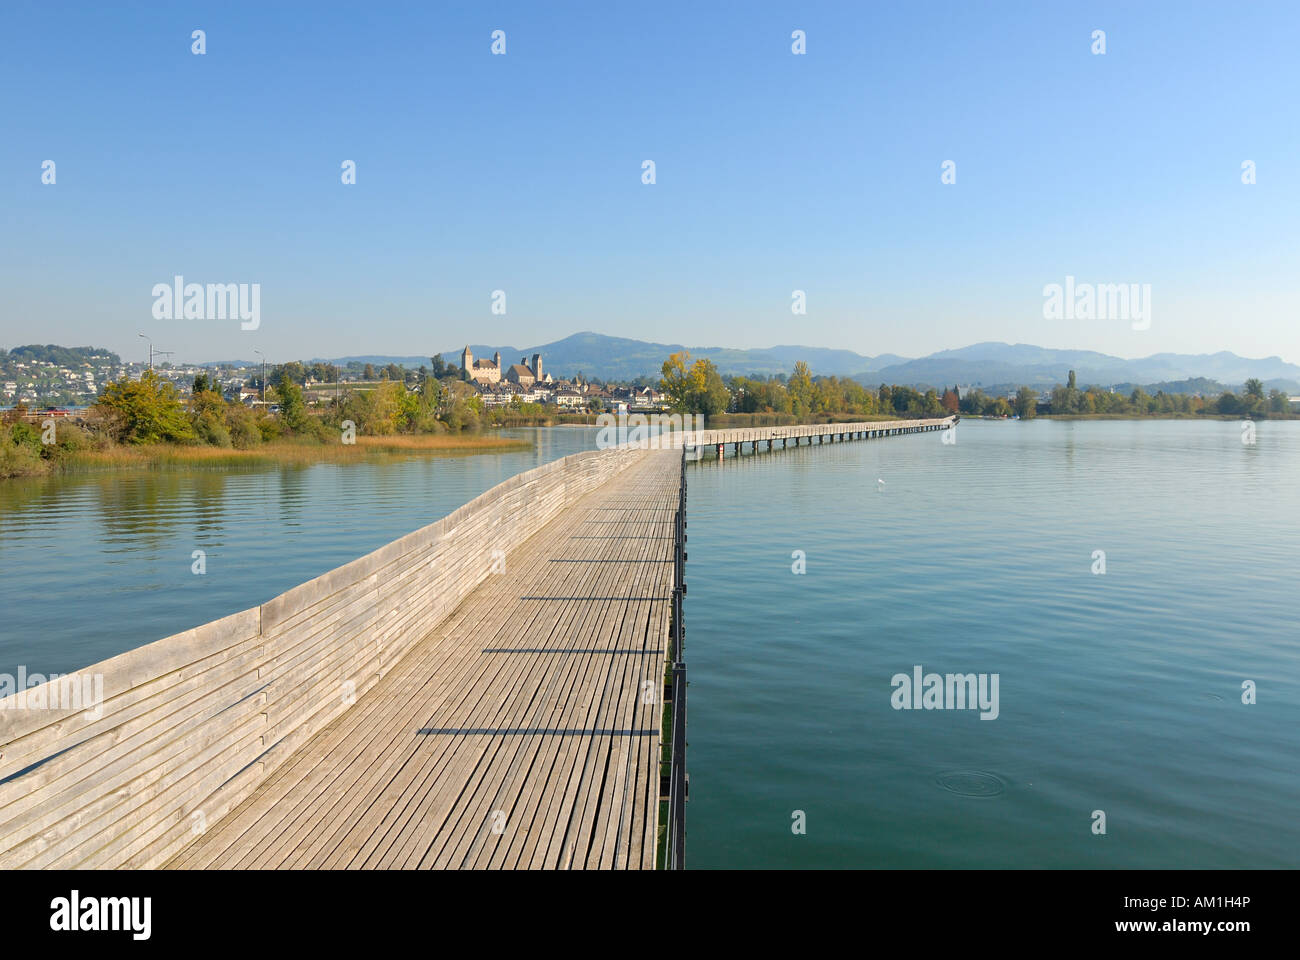 Rapperswil - wooden bridge over the lake zurich - canton of St. Gallen, Switzerland, Europe. Stock Photo